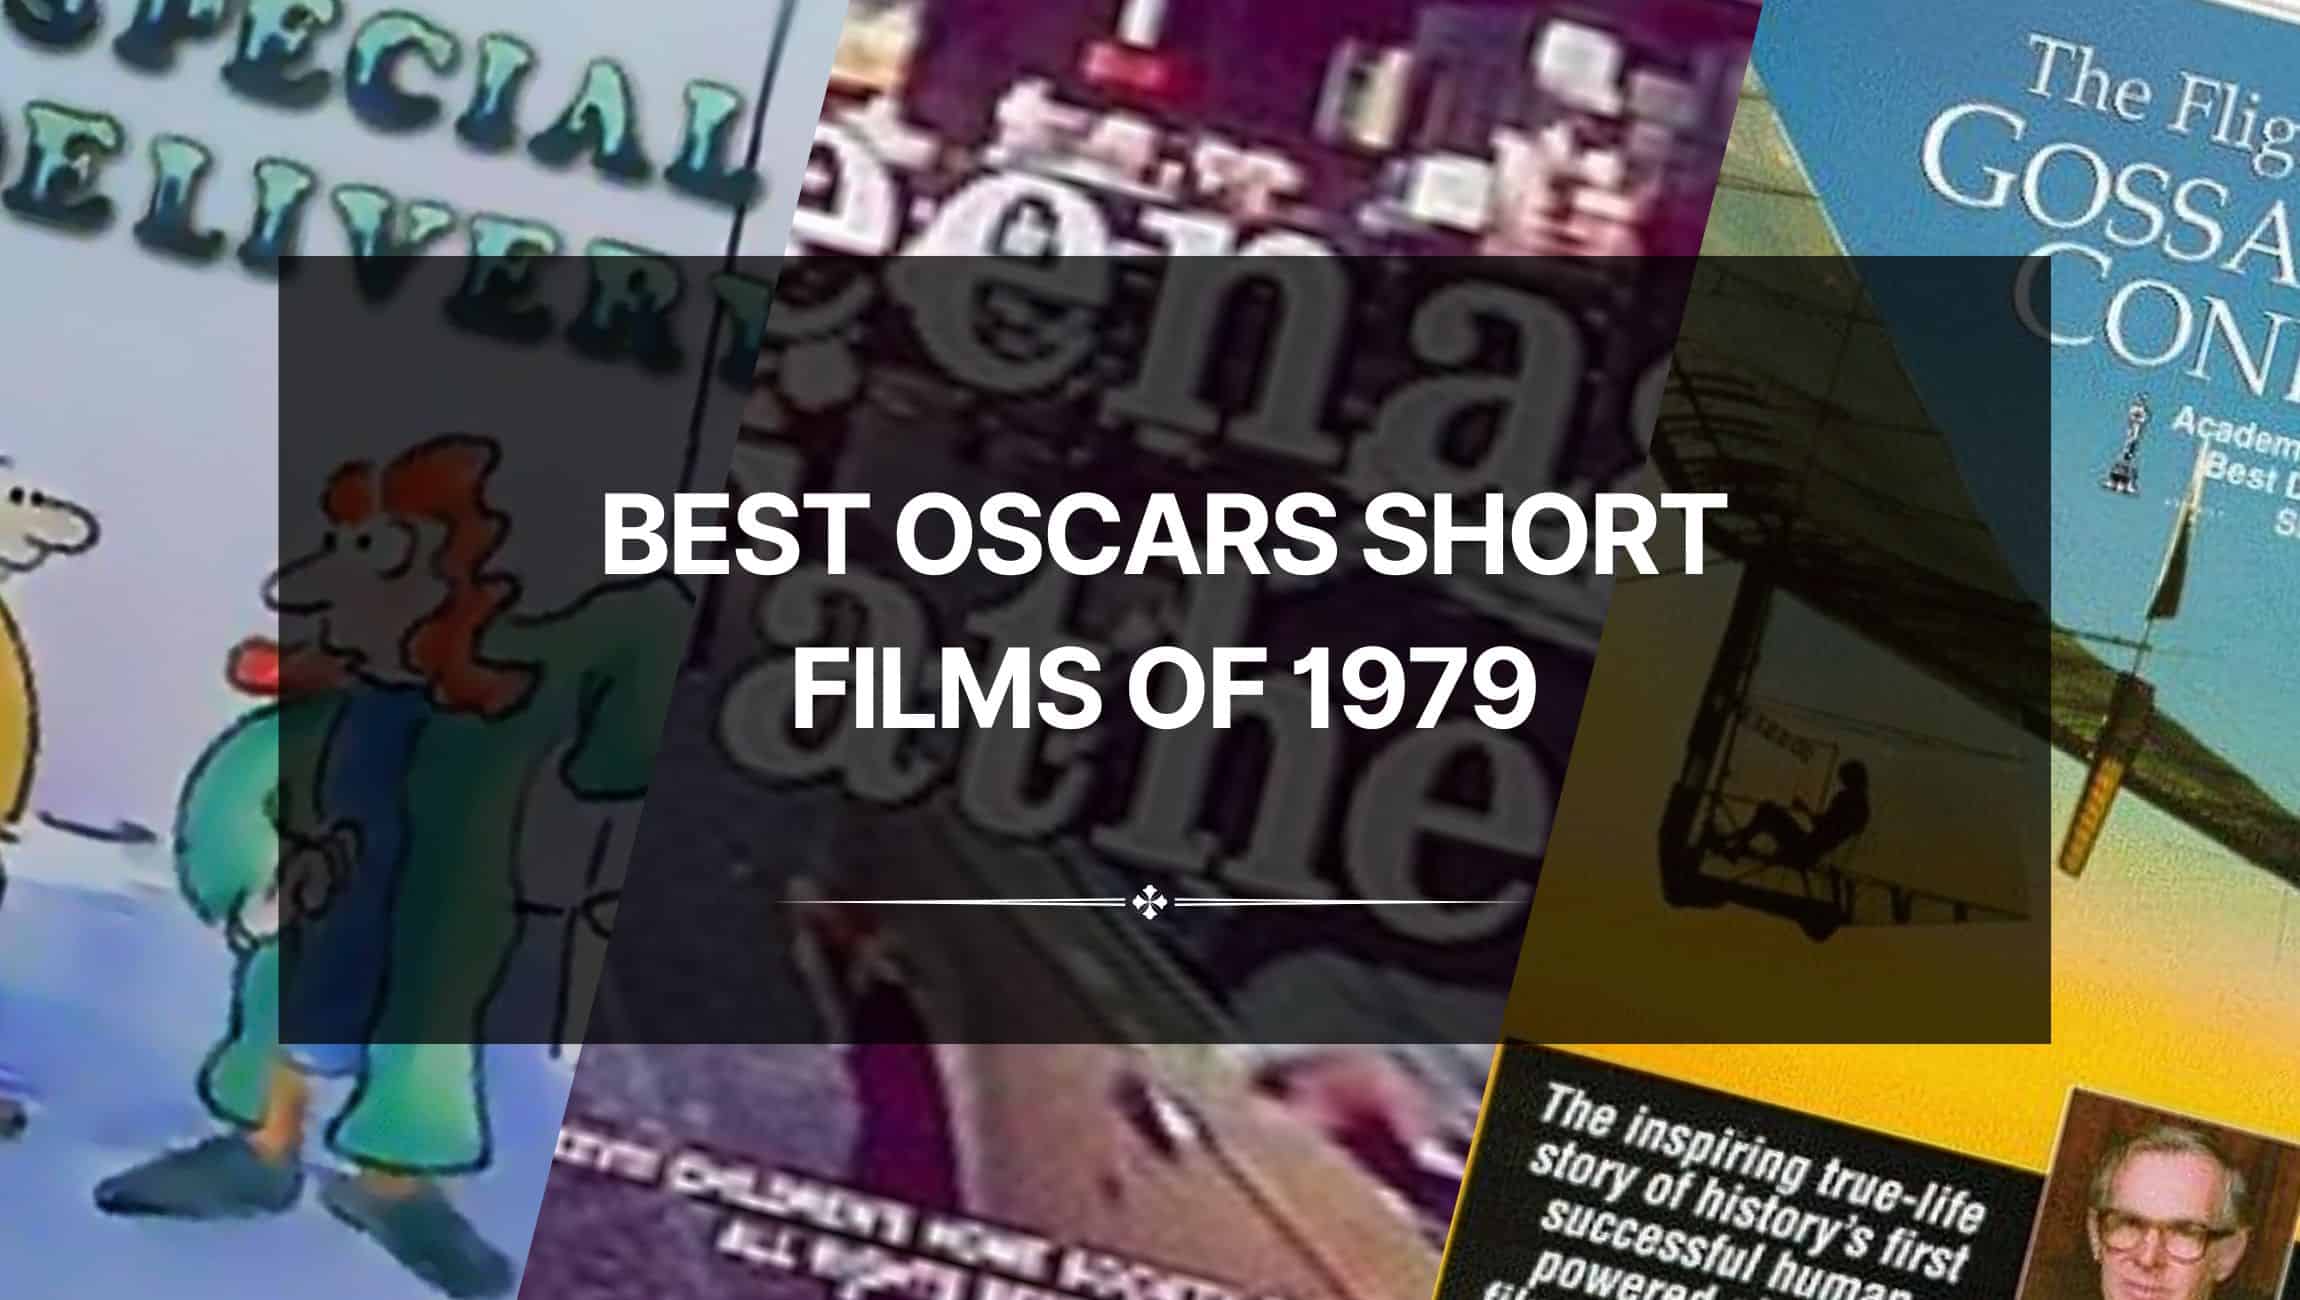 Best Oscars Short Films of 1979